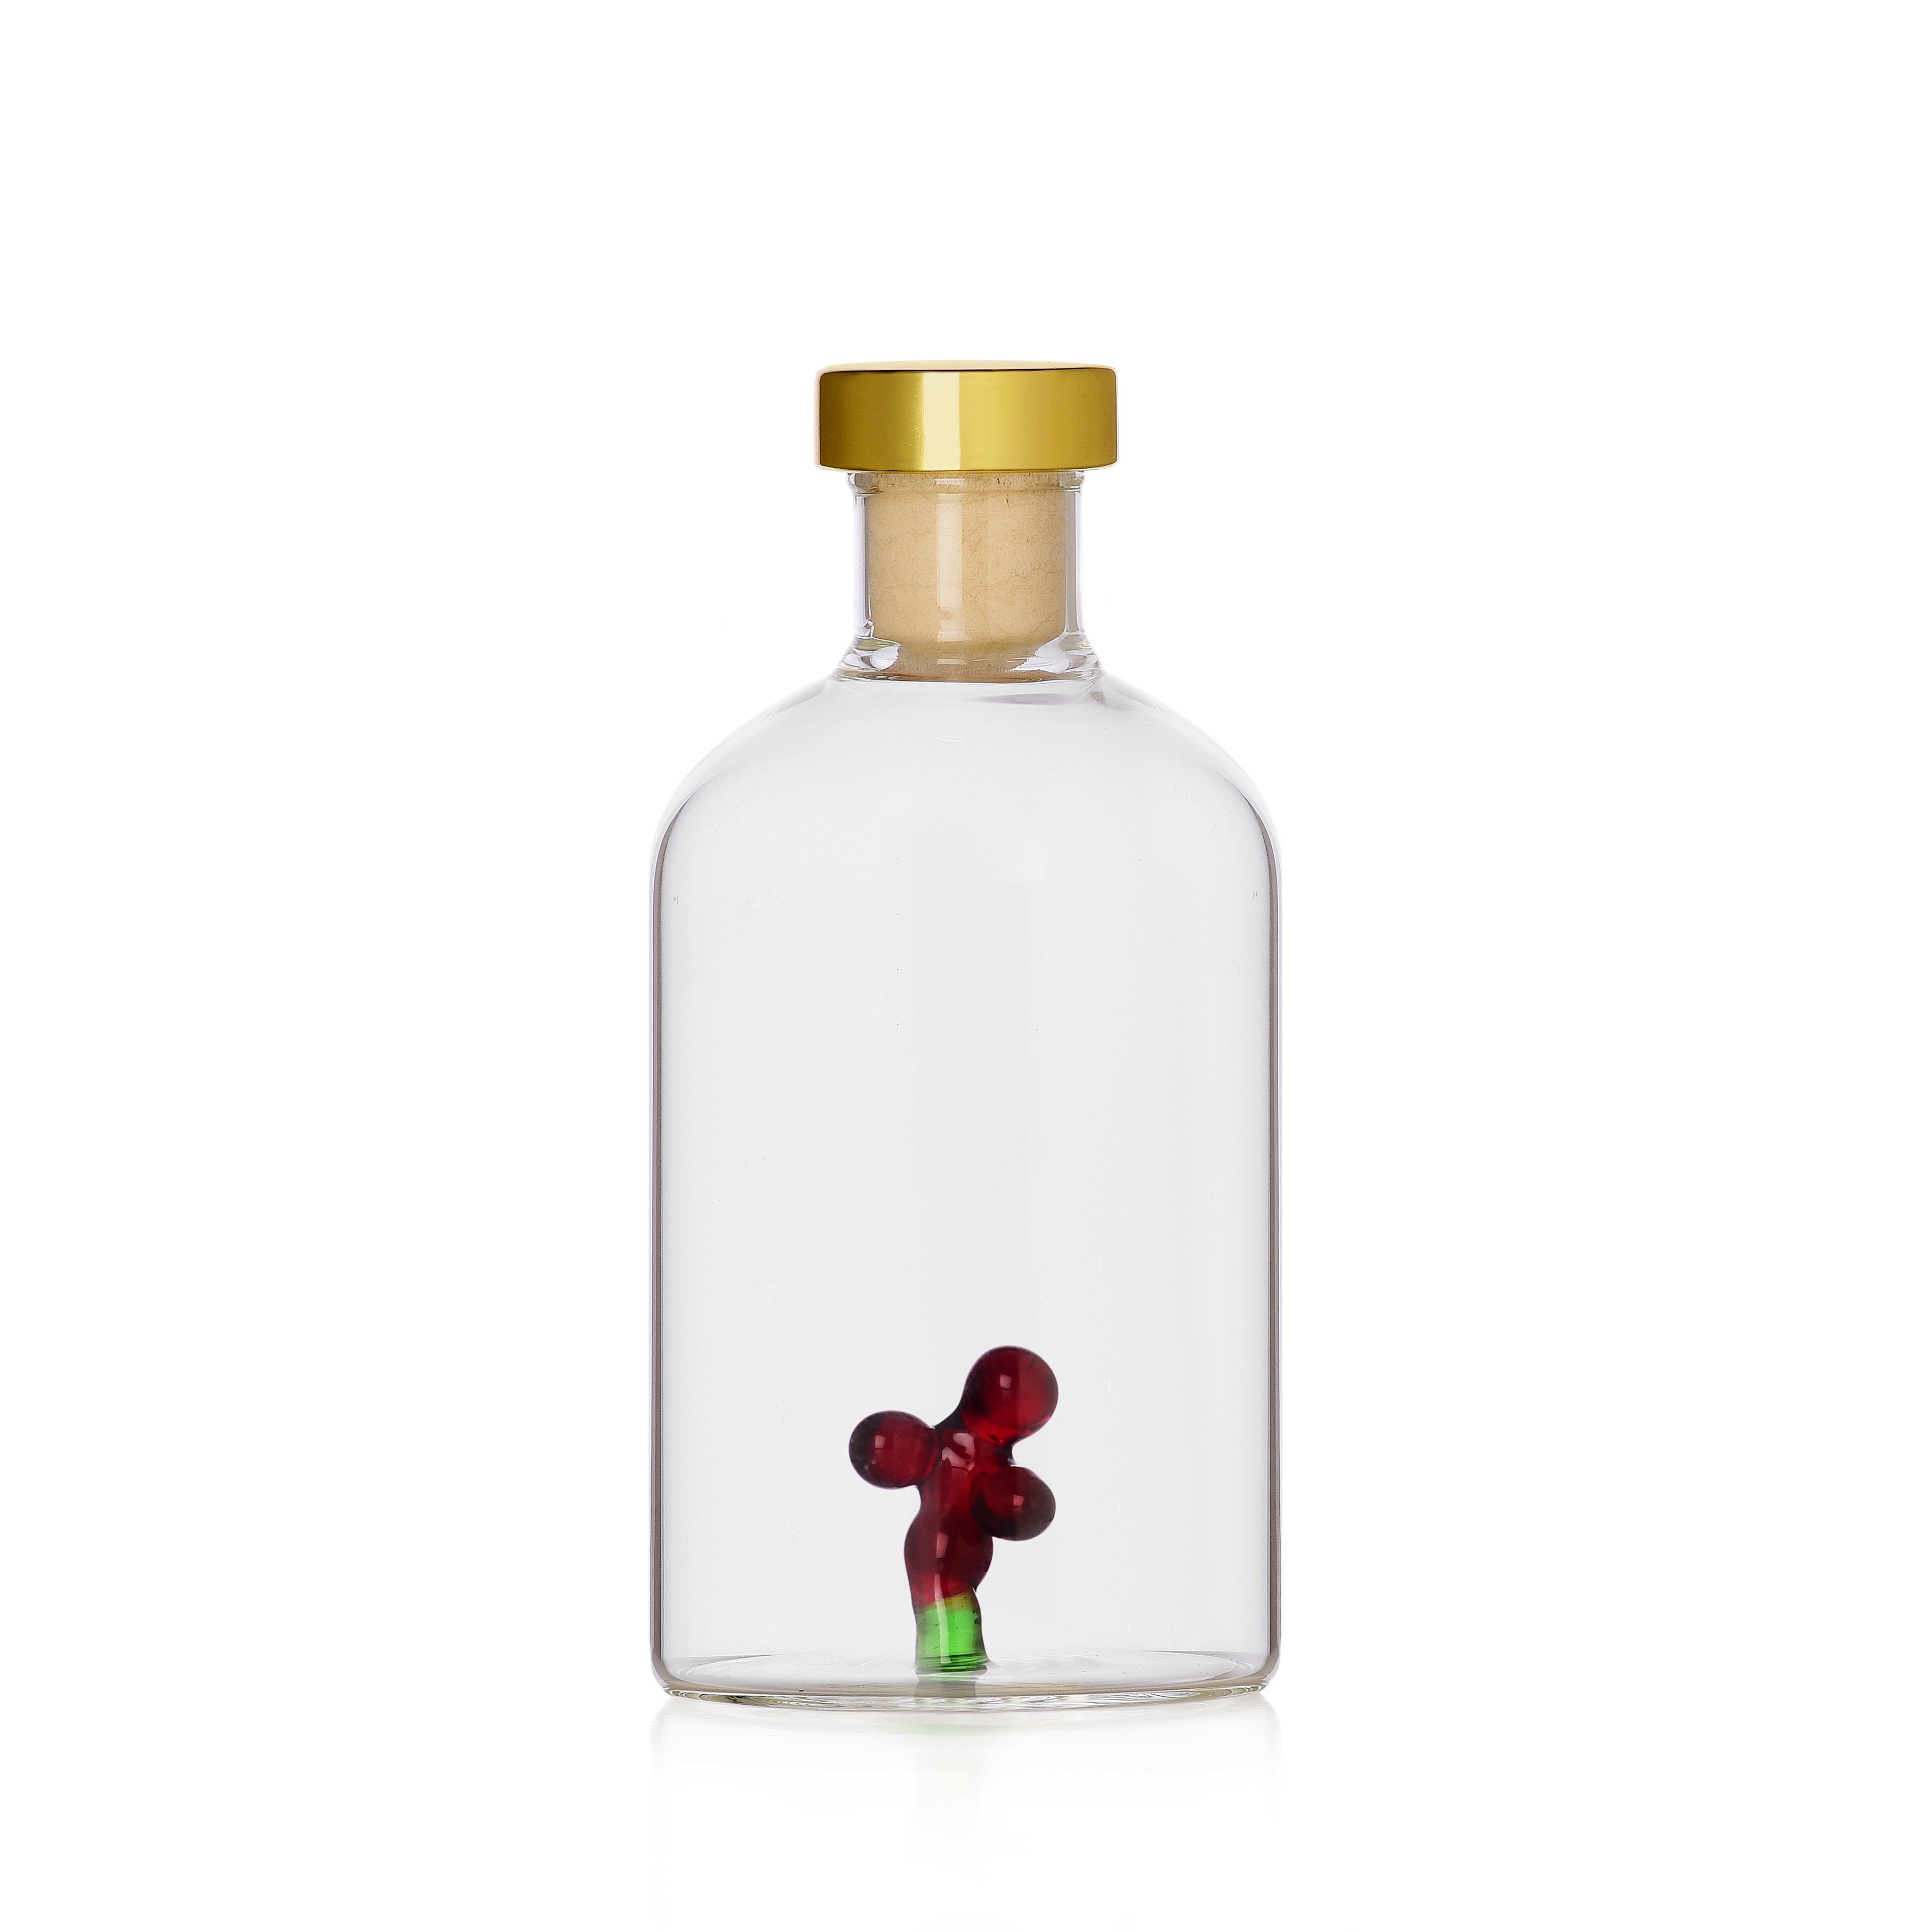 Ichendorf Greenwood Perfumer small